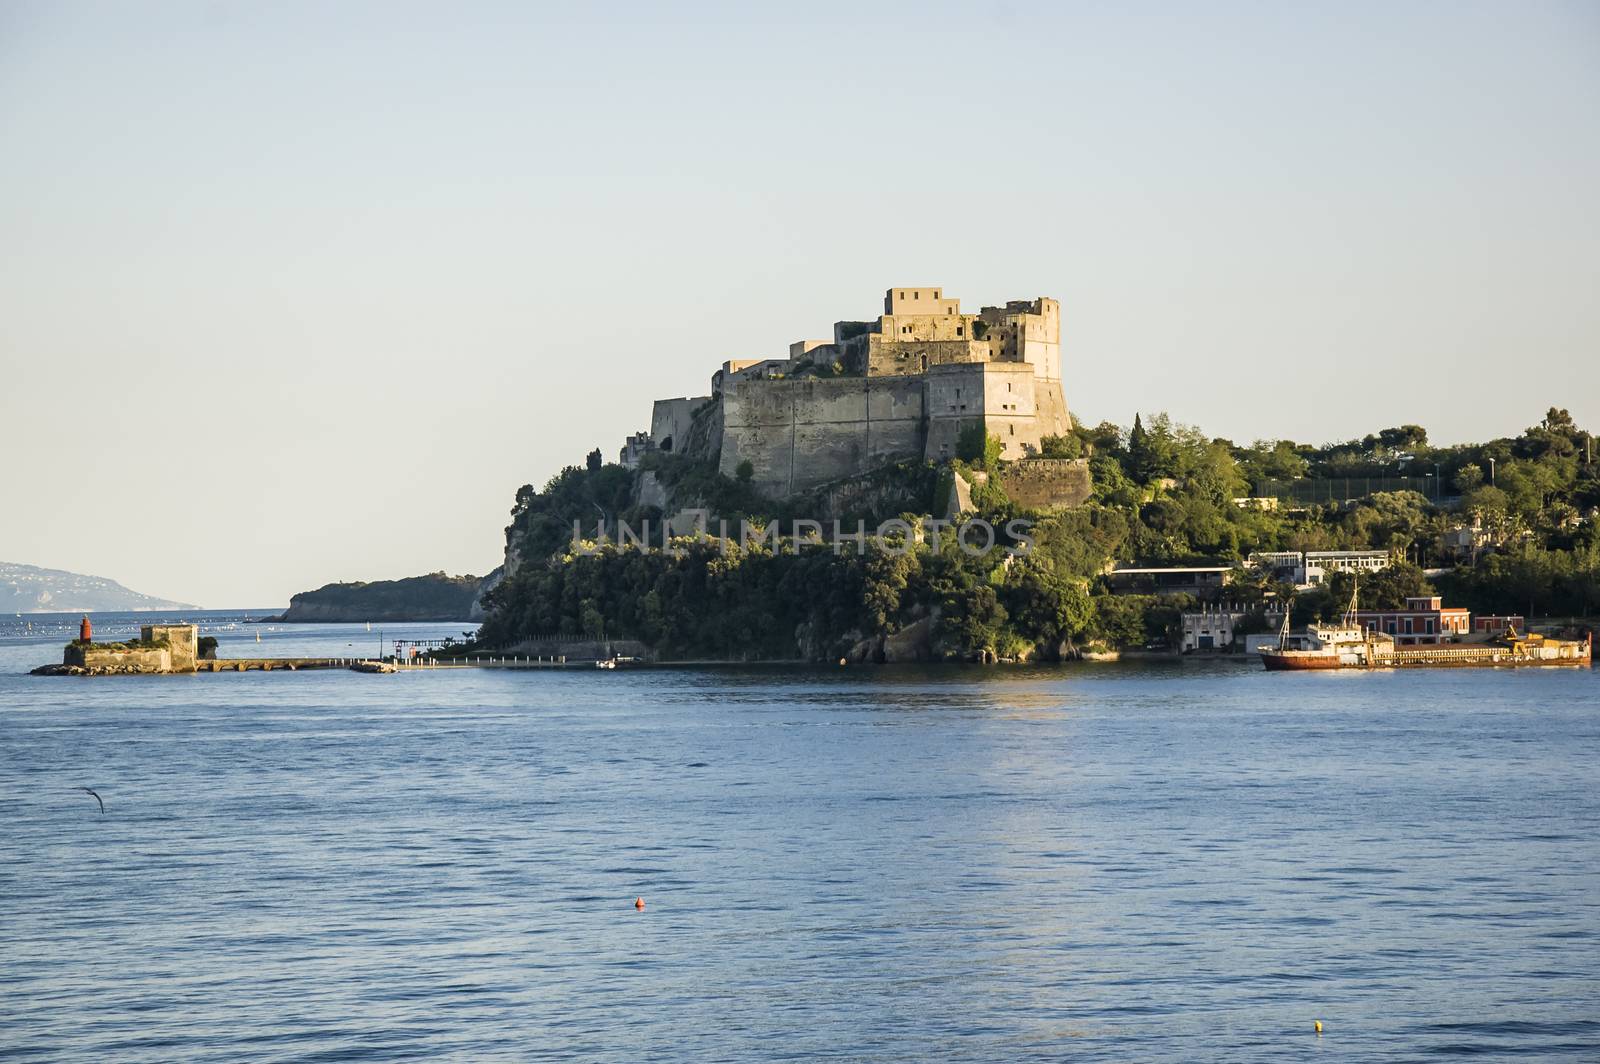 View of the Aragon castle in Baia, Pozzuoli, Naples Italy